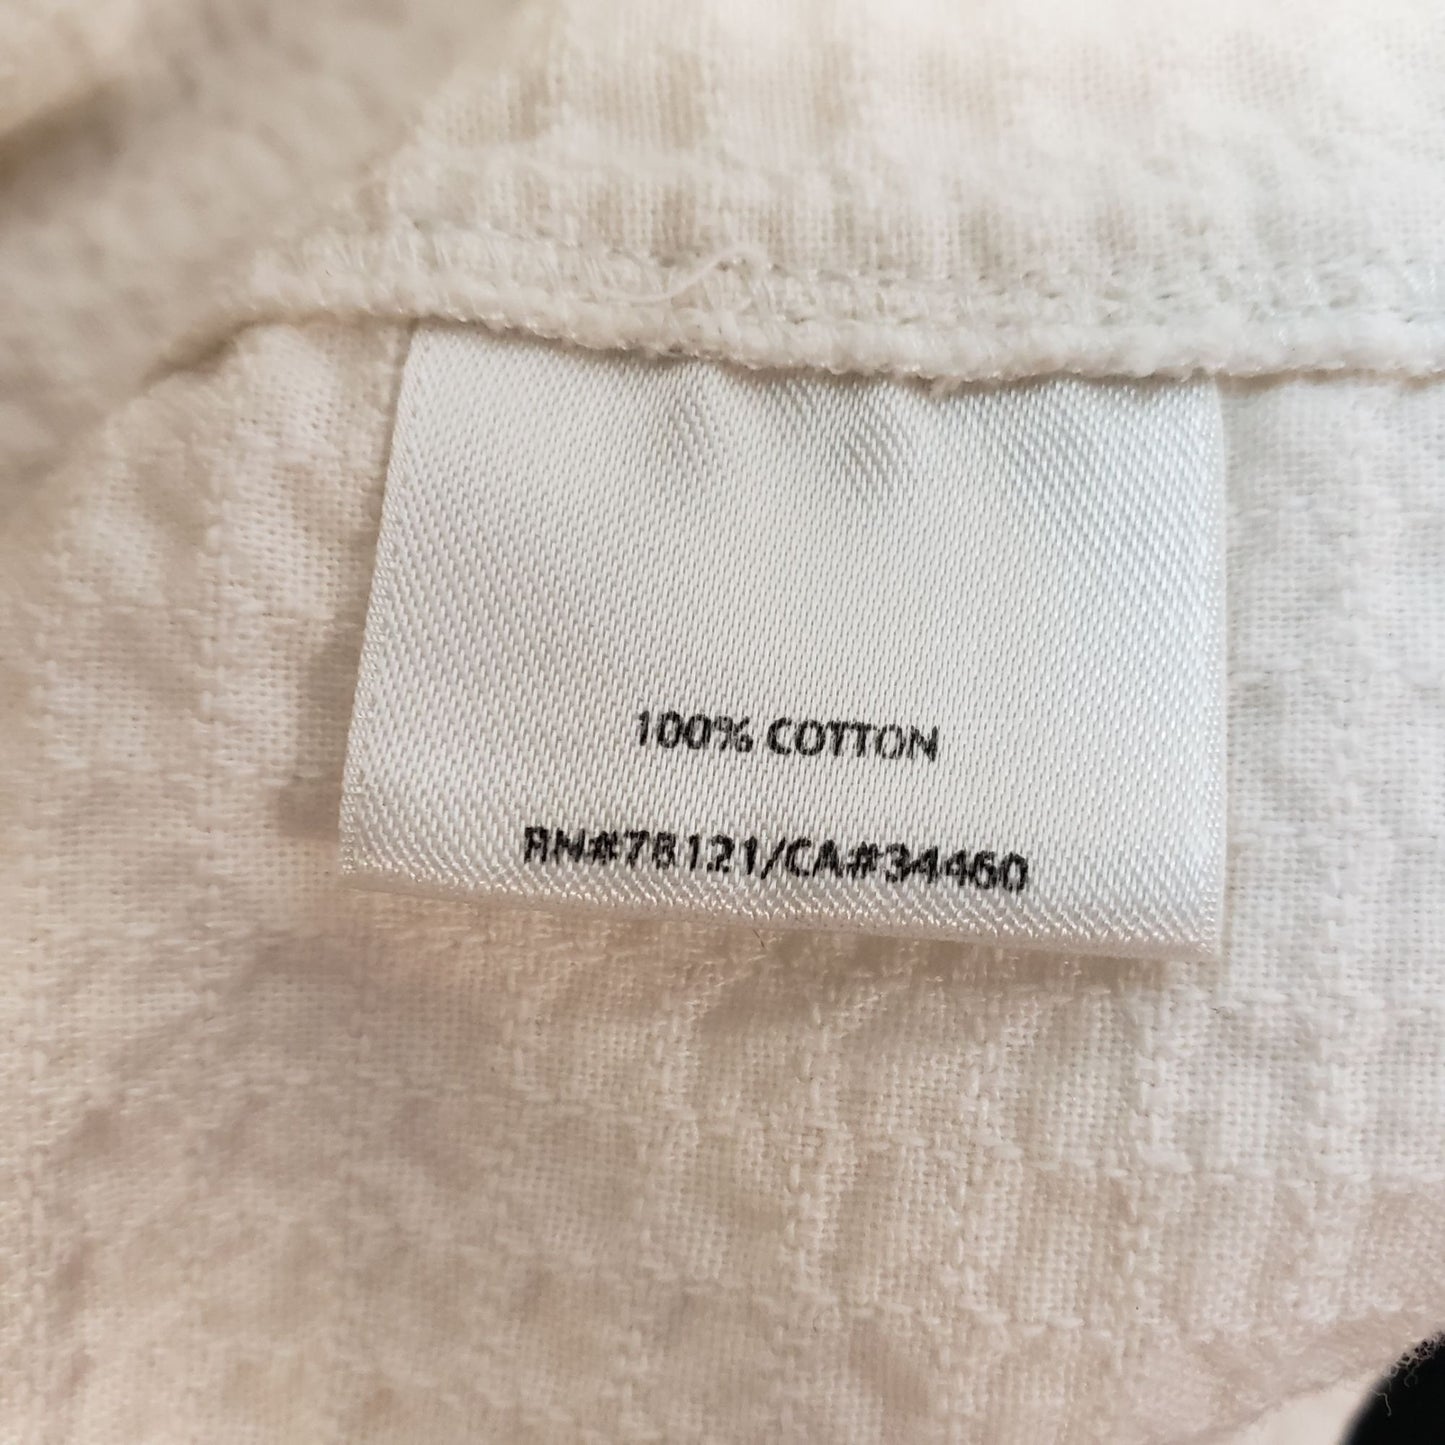 Eileen Fisher Puff Texture Snap Closure Jacket Size Medium/Large